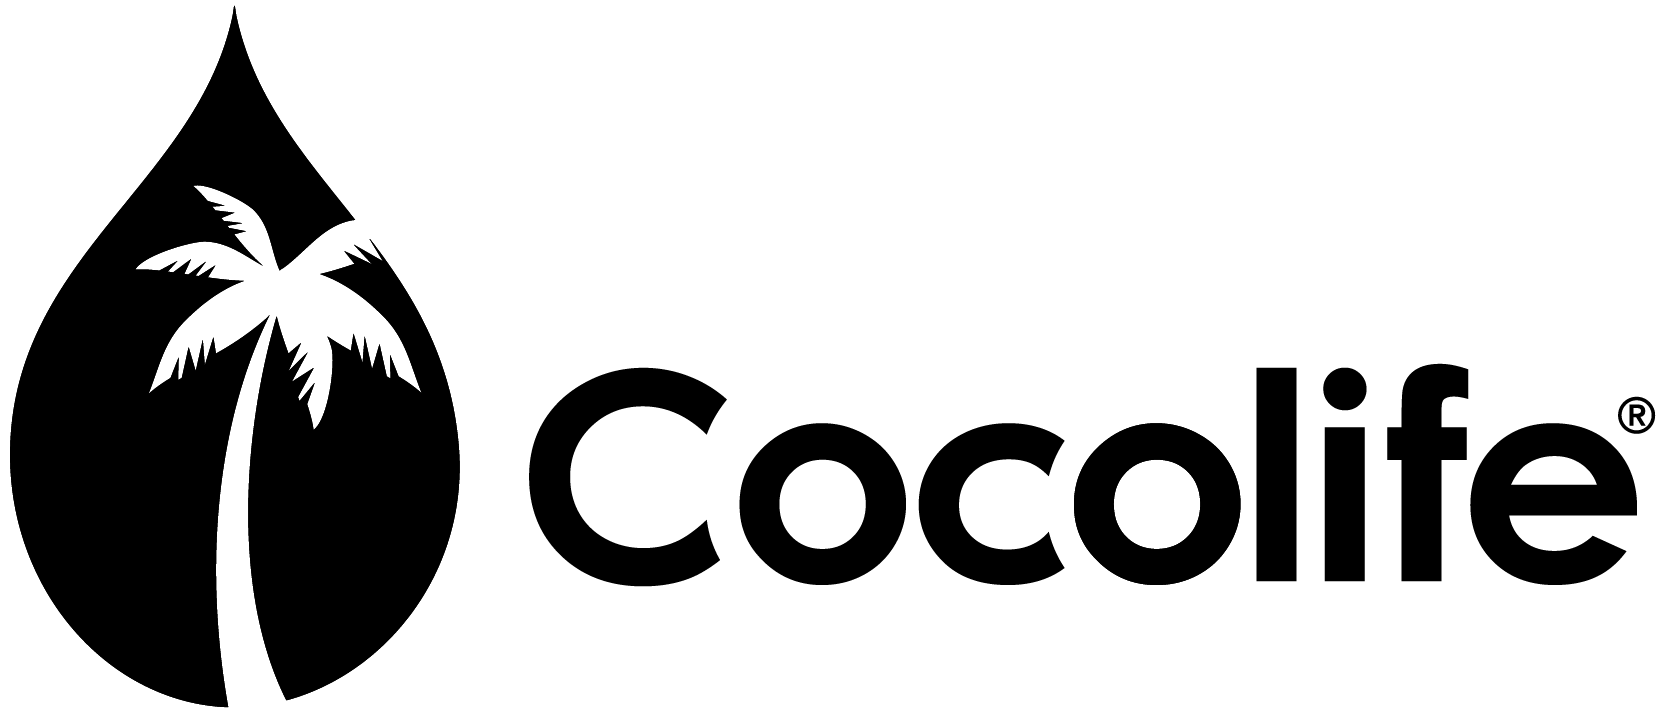 Cocolife Logo - Premium Plant Based Health Food Products | Cocolife Australia